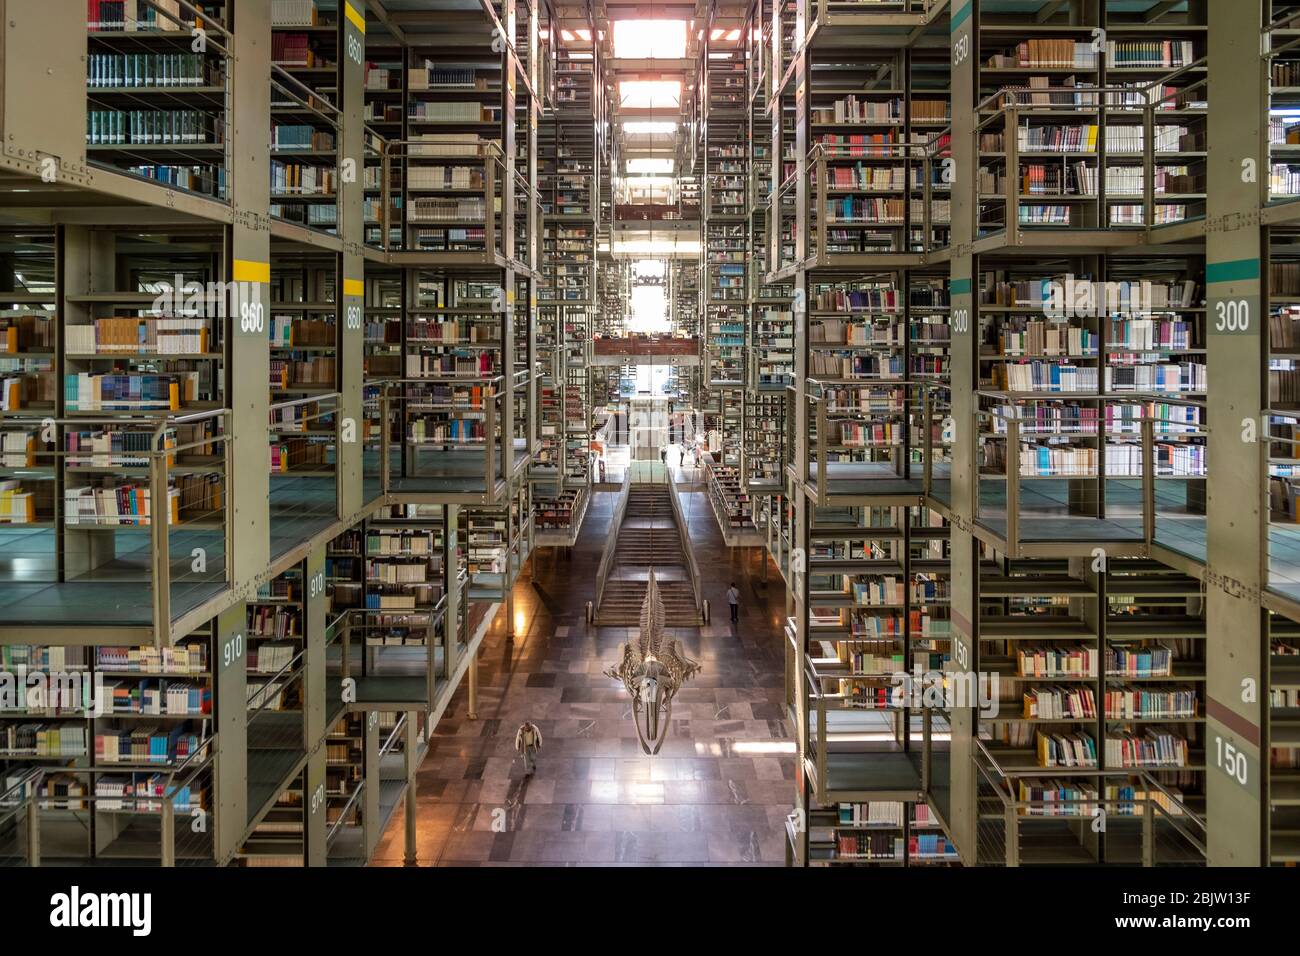 Riesige Bibliothek (38,000 Quadratmeter oder 409,000 Quadratfuß) Biblioteca Vasconcelos Mexiko-Stadt, Mexiko Stockfoto